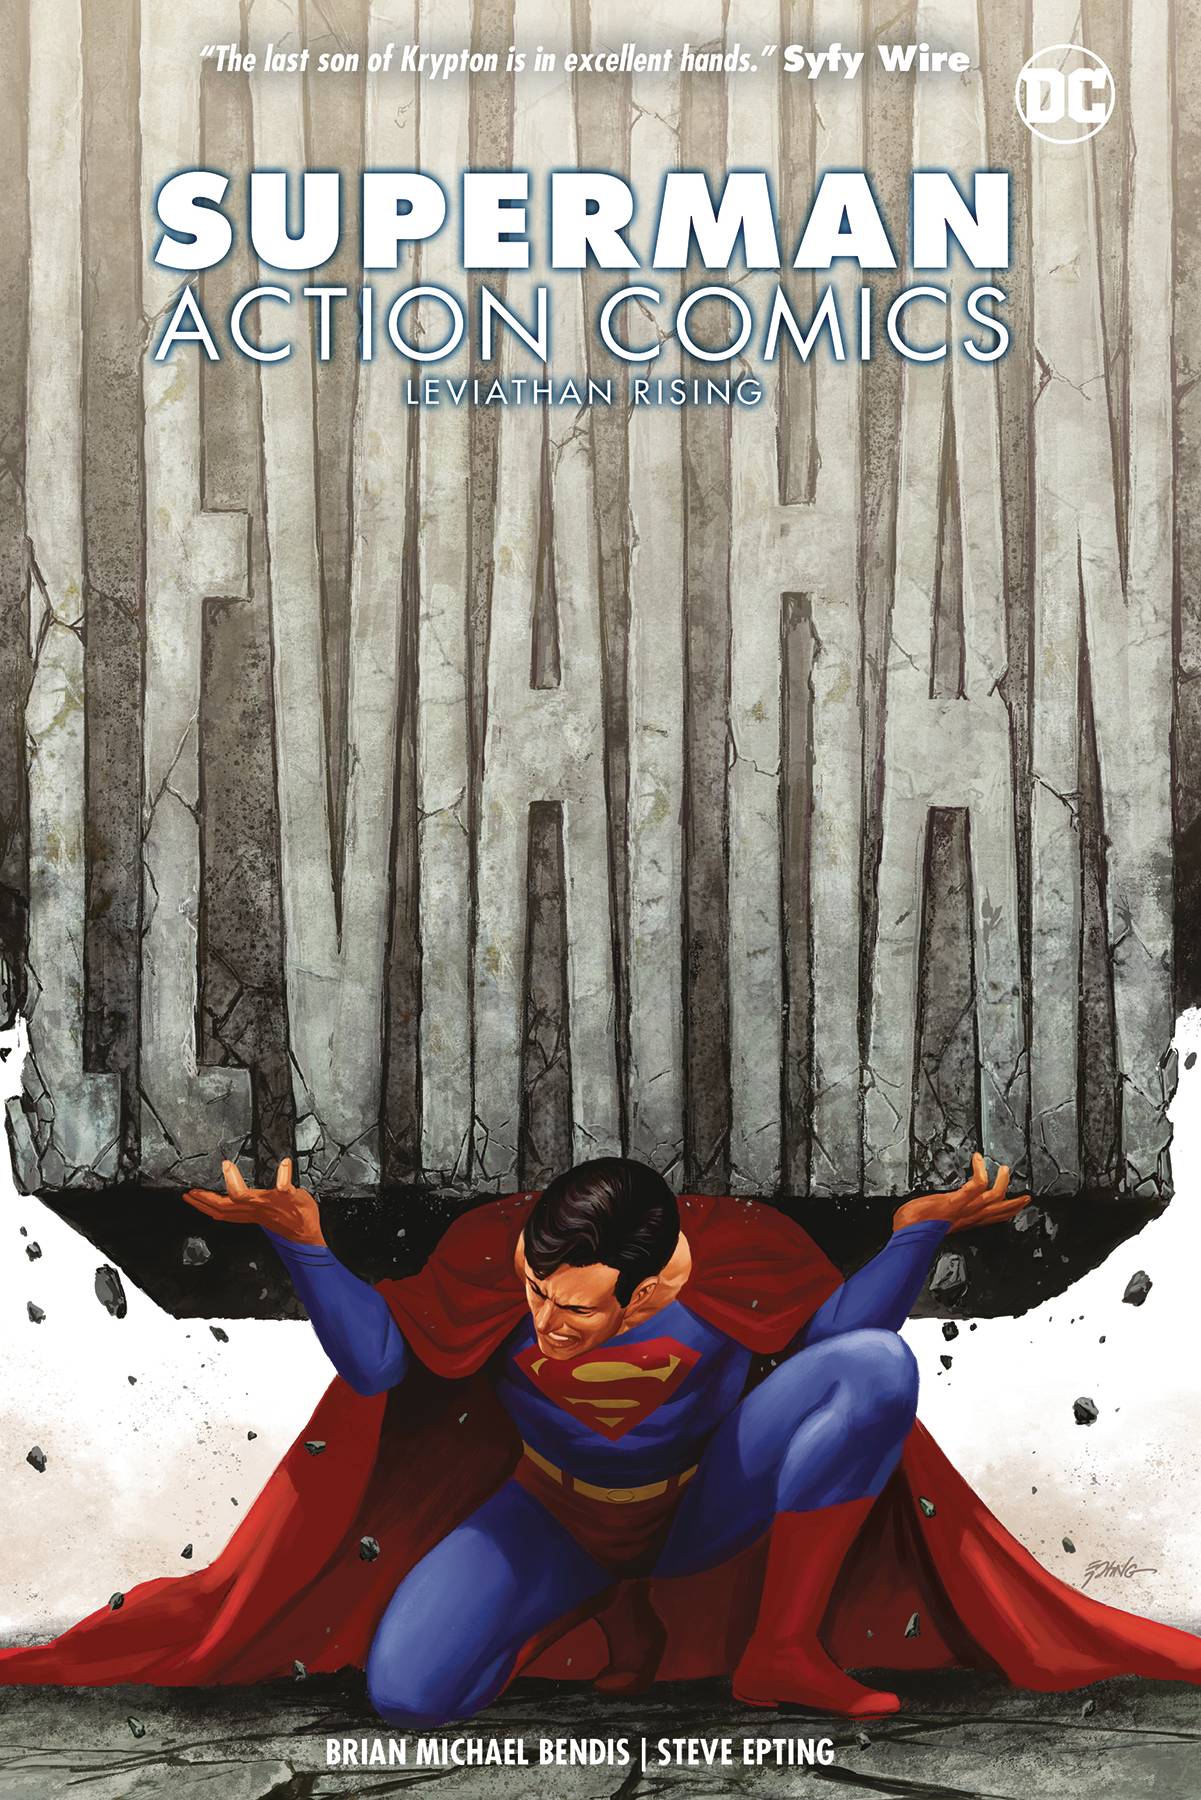 SUPERMAN ACTION COMICS TP 02 LEVIATHAN RISING